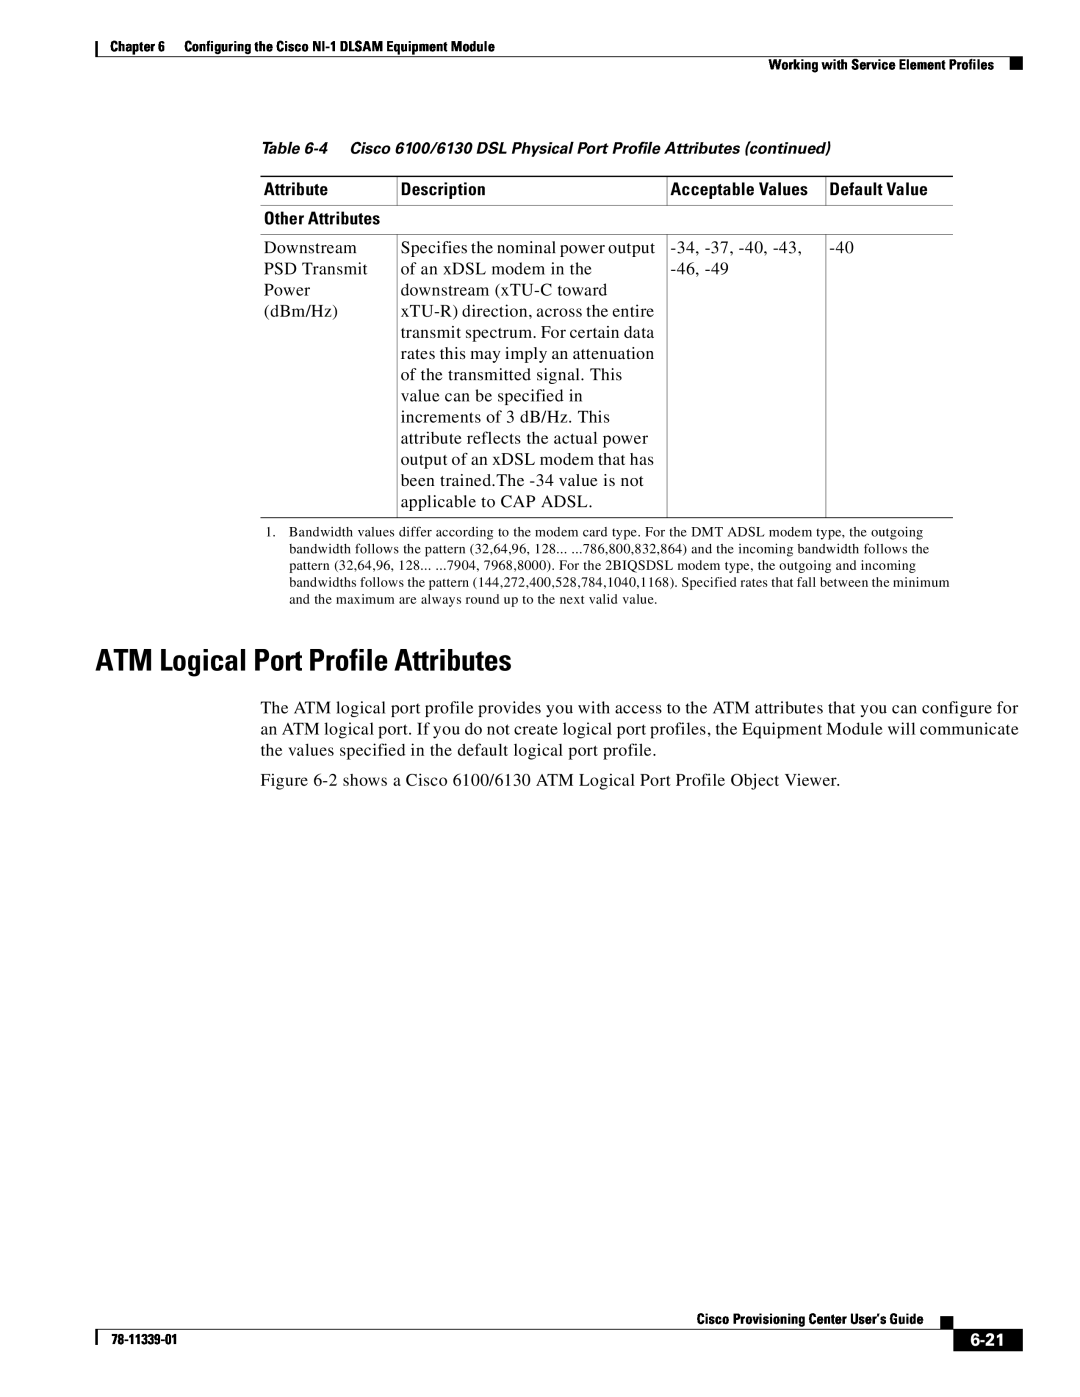 Cisco Systems NI-1 manual ATM Logical Port Profile Attributes, Other Attributes, 6-21, Description, Default Value 